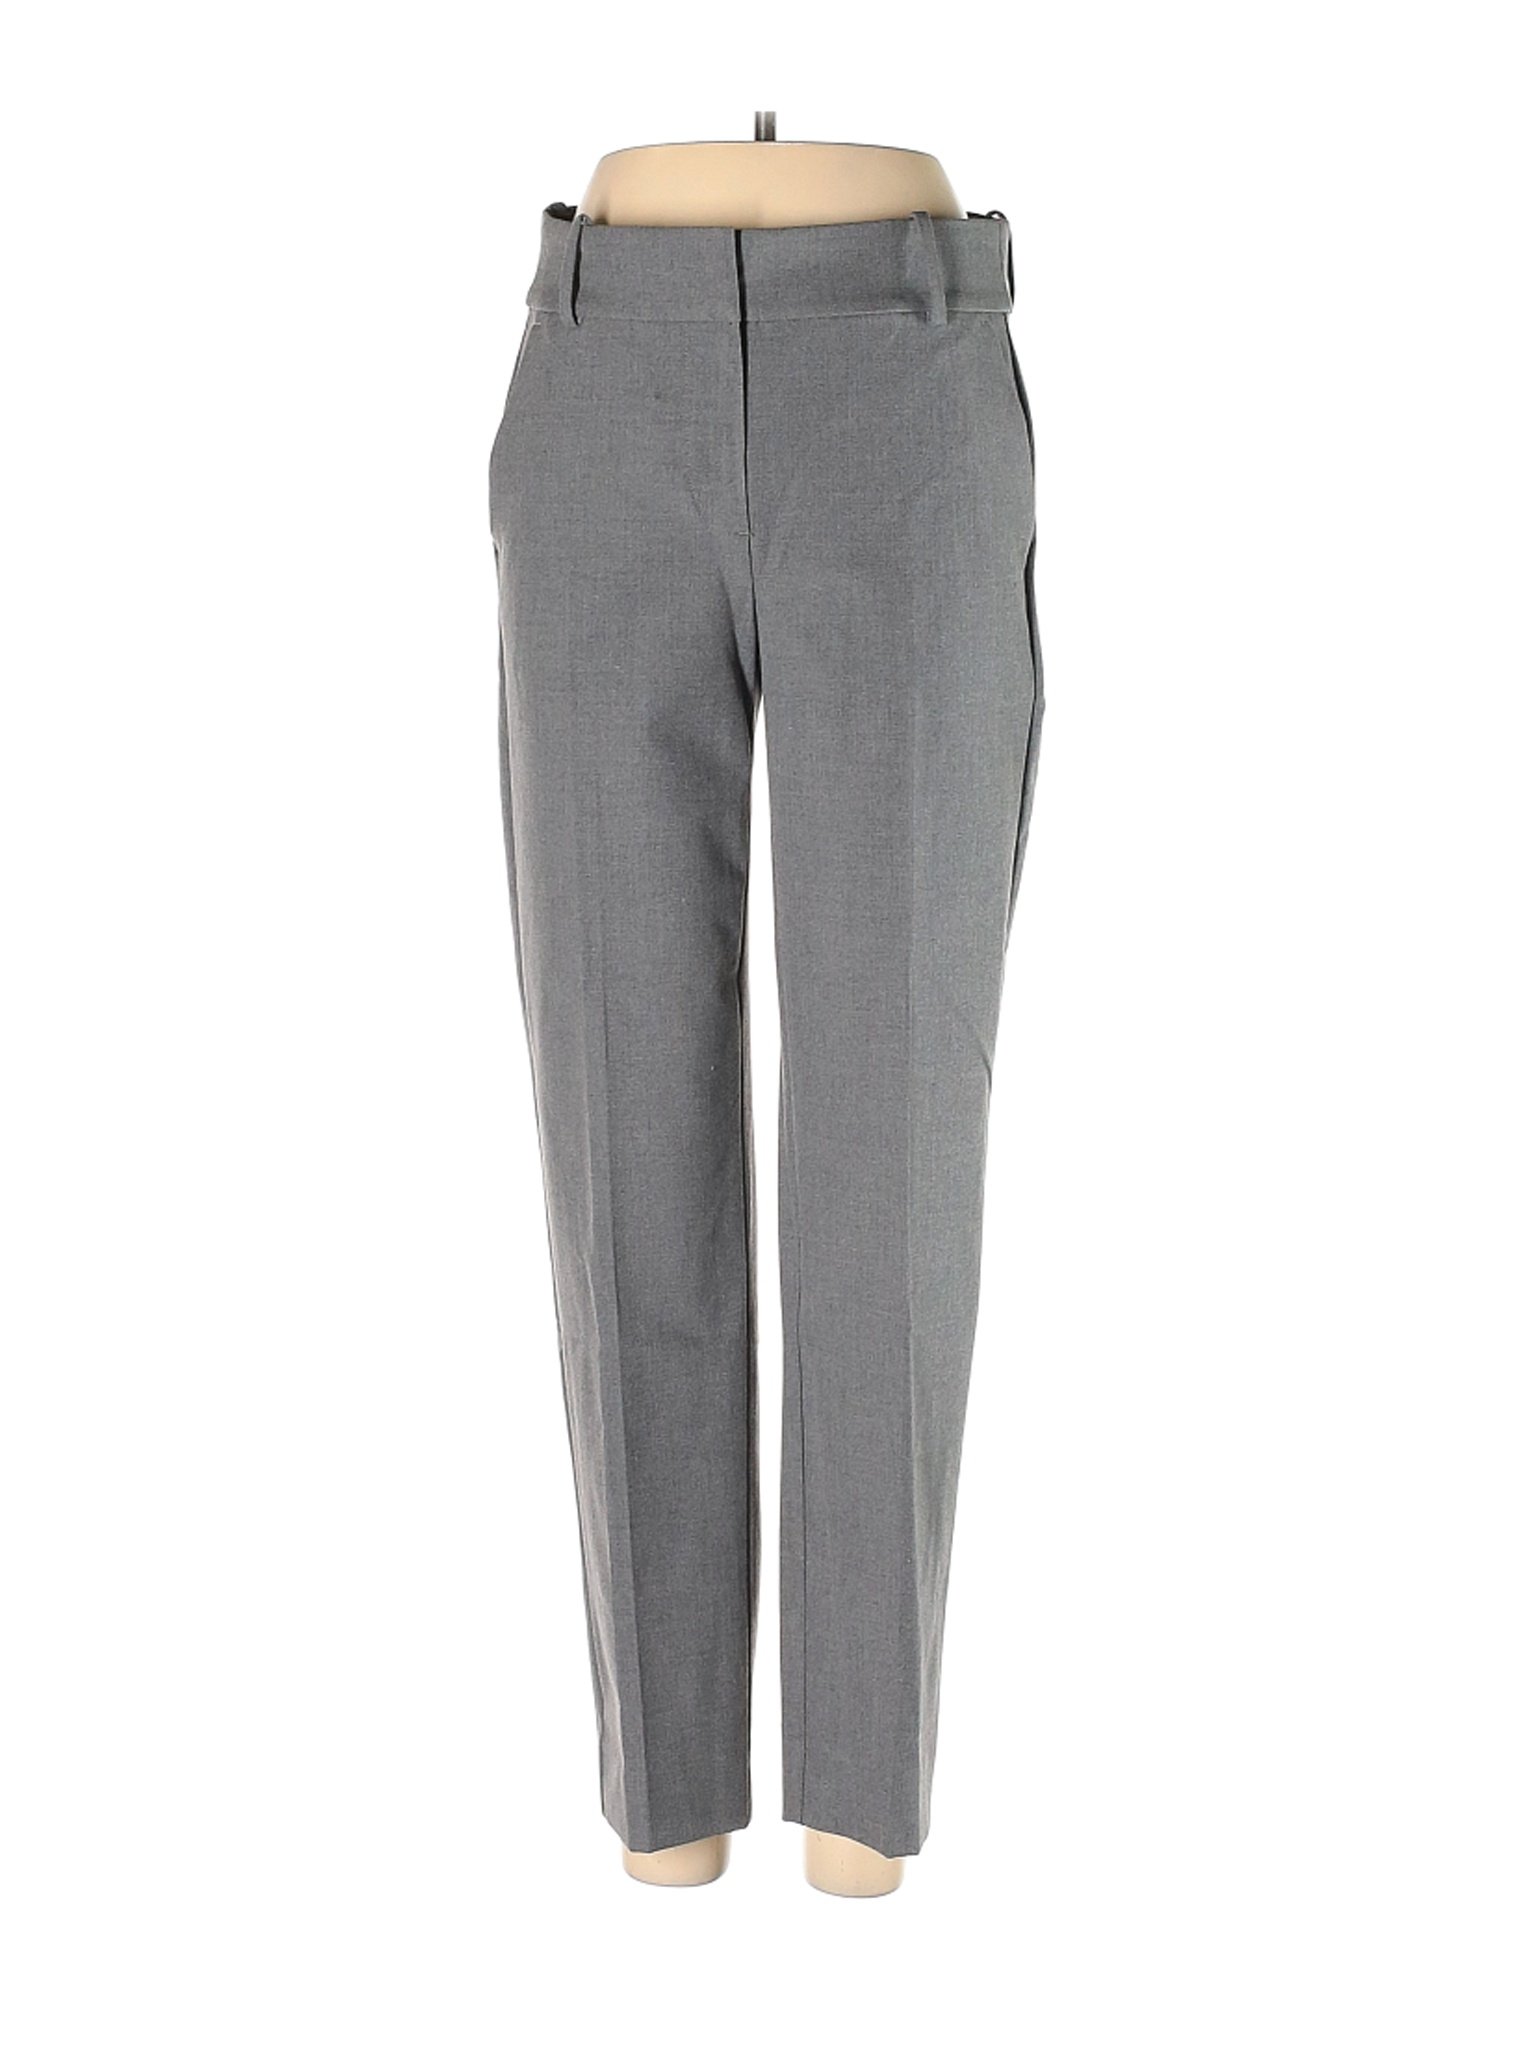 J.Crew Mercantile Women Gray Dress Pants 4 | eBay